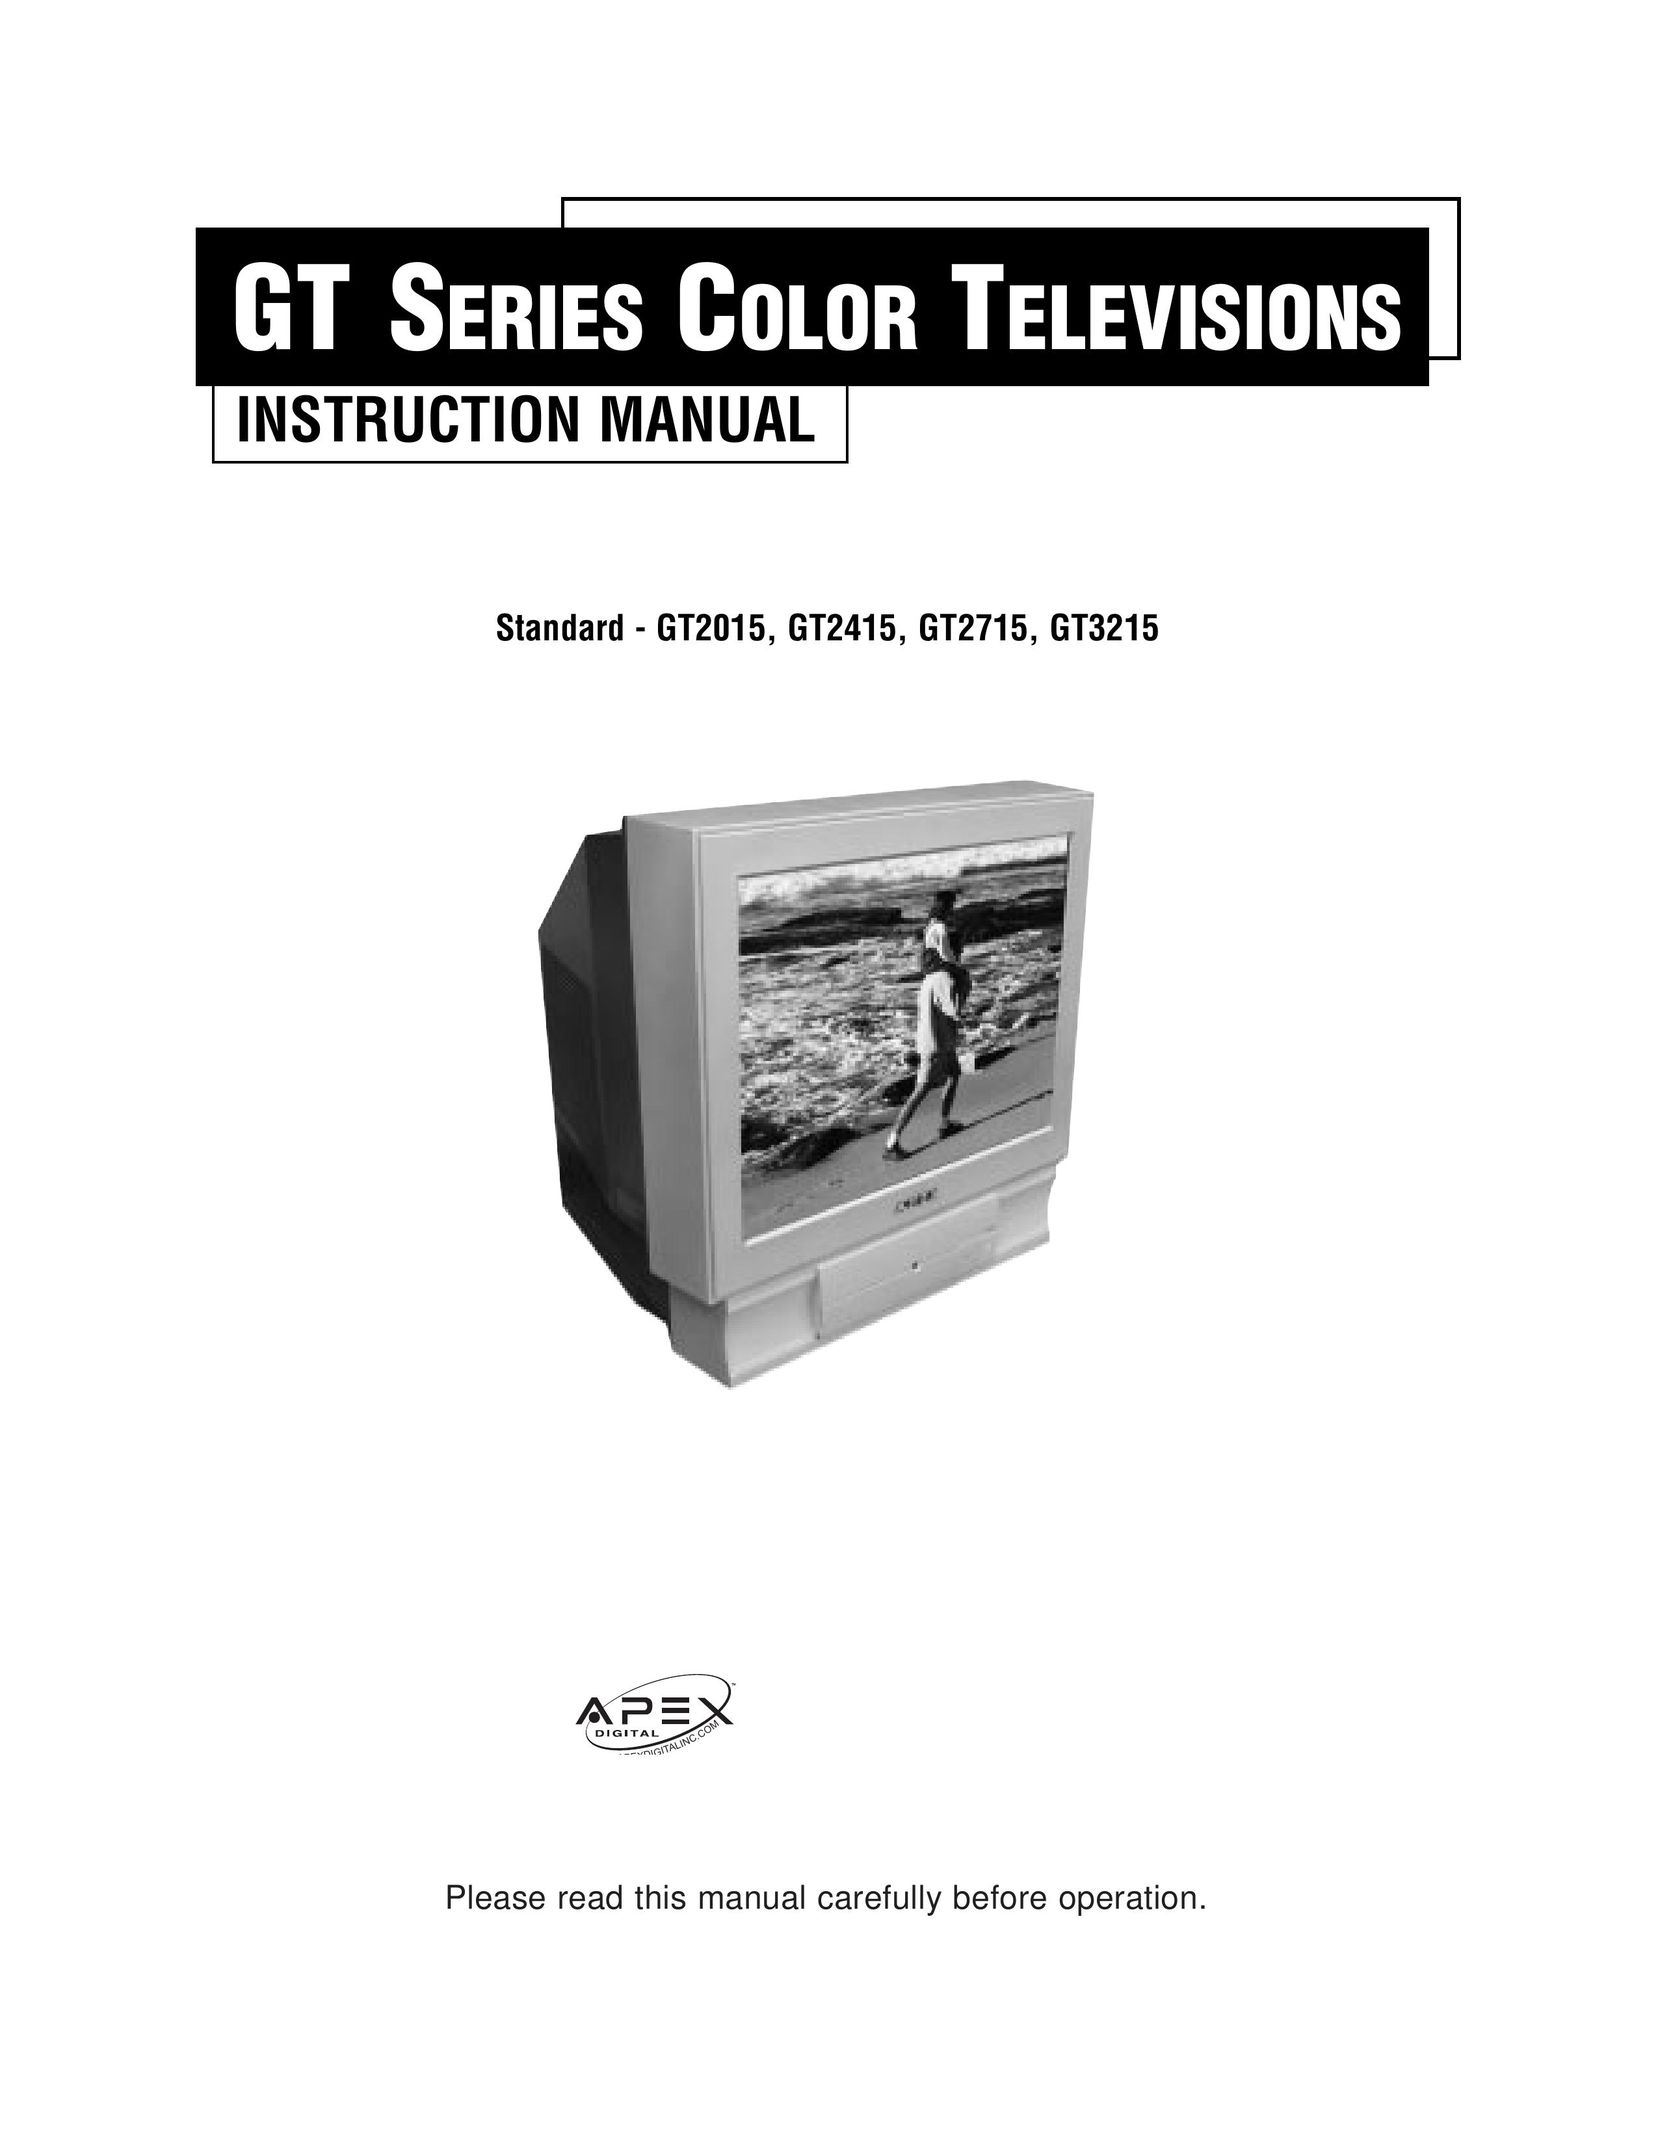 Apex Digital GT2015, GT2415, GT2715, GT3215 CRT Television User Manual